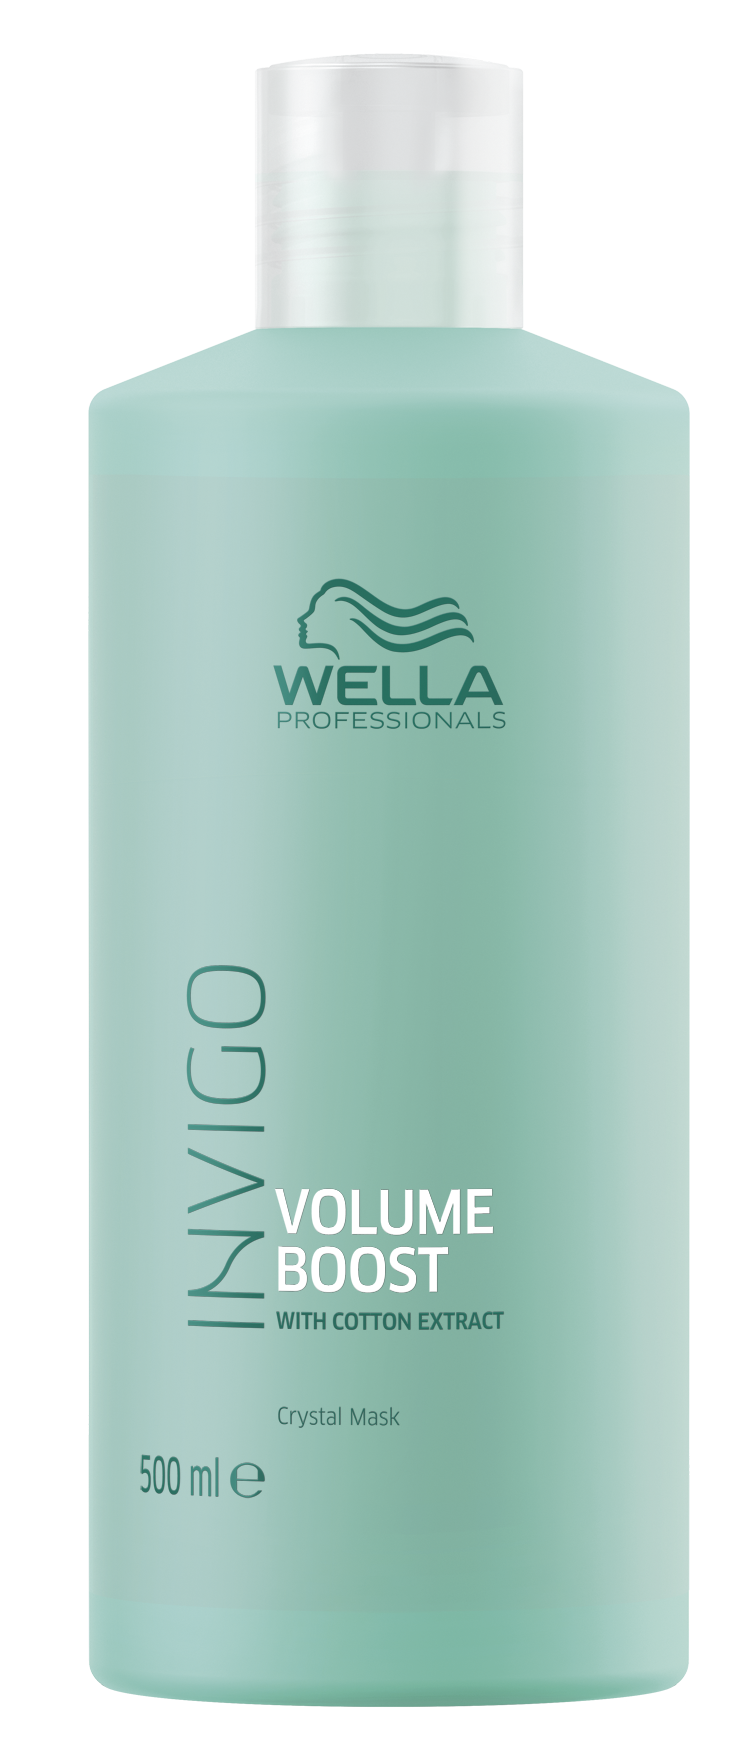 WELLA PROFESSIONALS Маска-кристалл уплотняющая / Volume Boost 500 мл маска для волос malle moscow уплотняющая для укрепления волос 300 мл